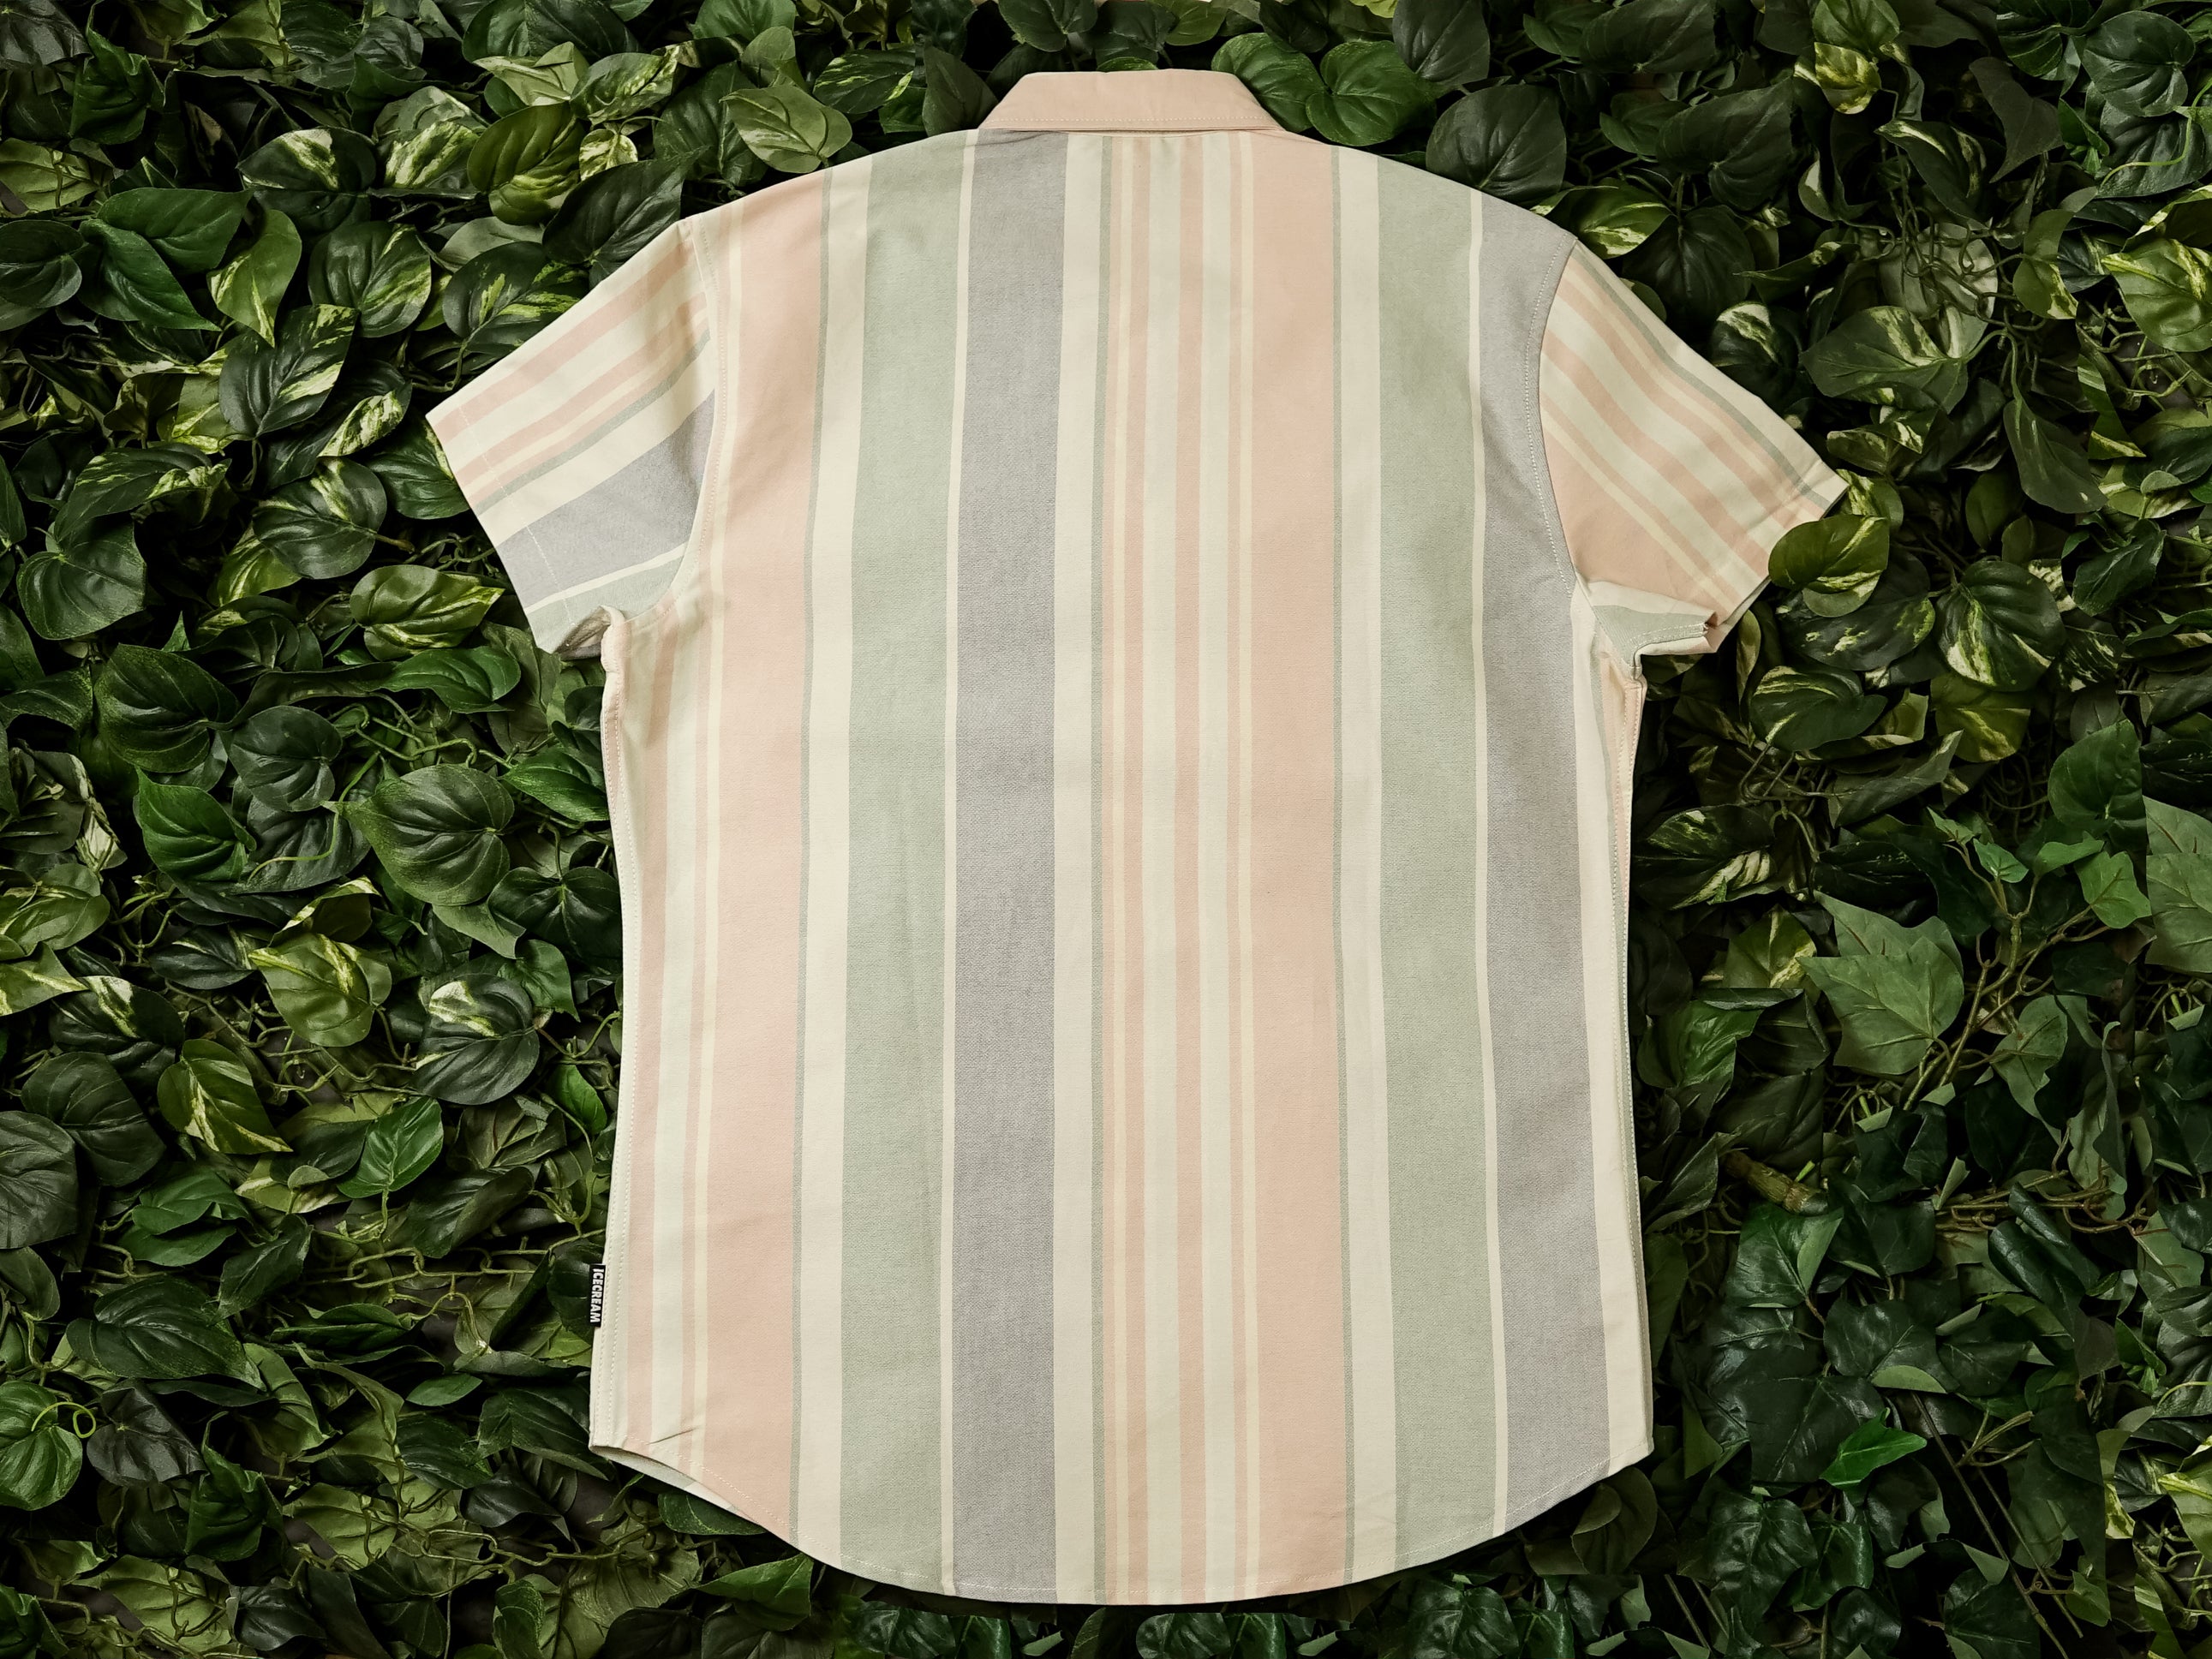 ICECREAM Neapolitan S/S Woven Shirt [491-1600-PINK]